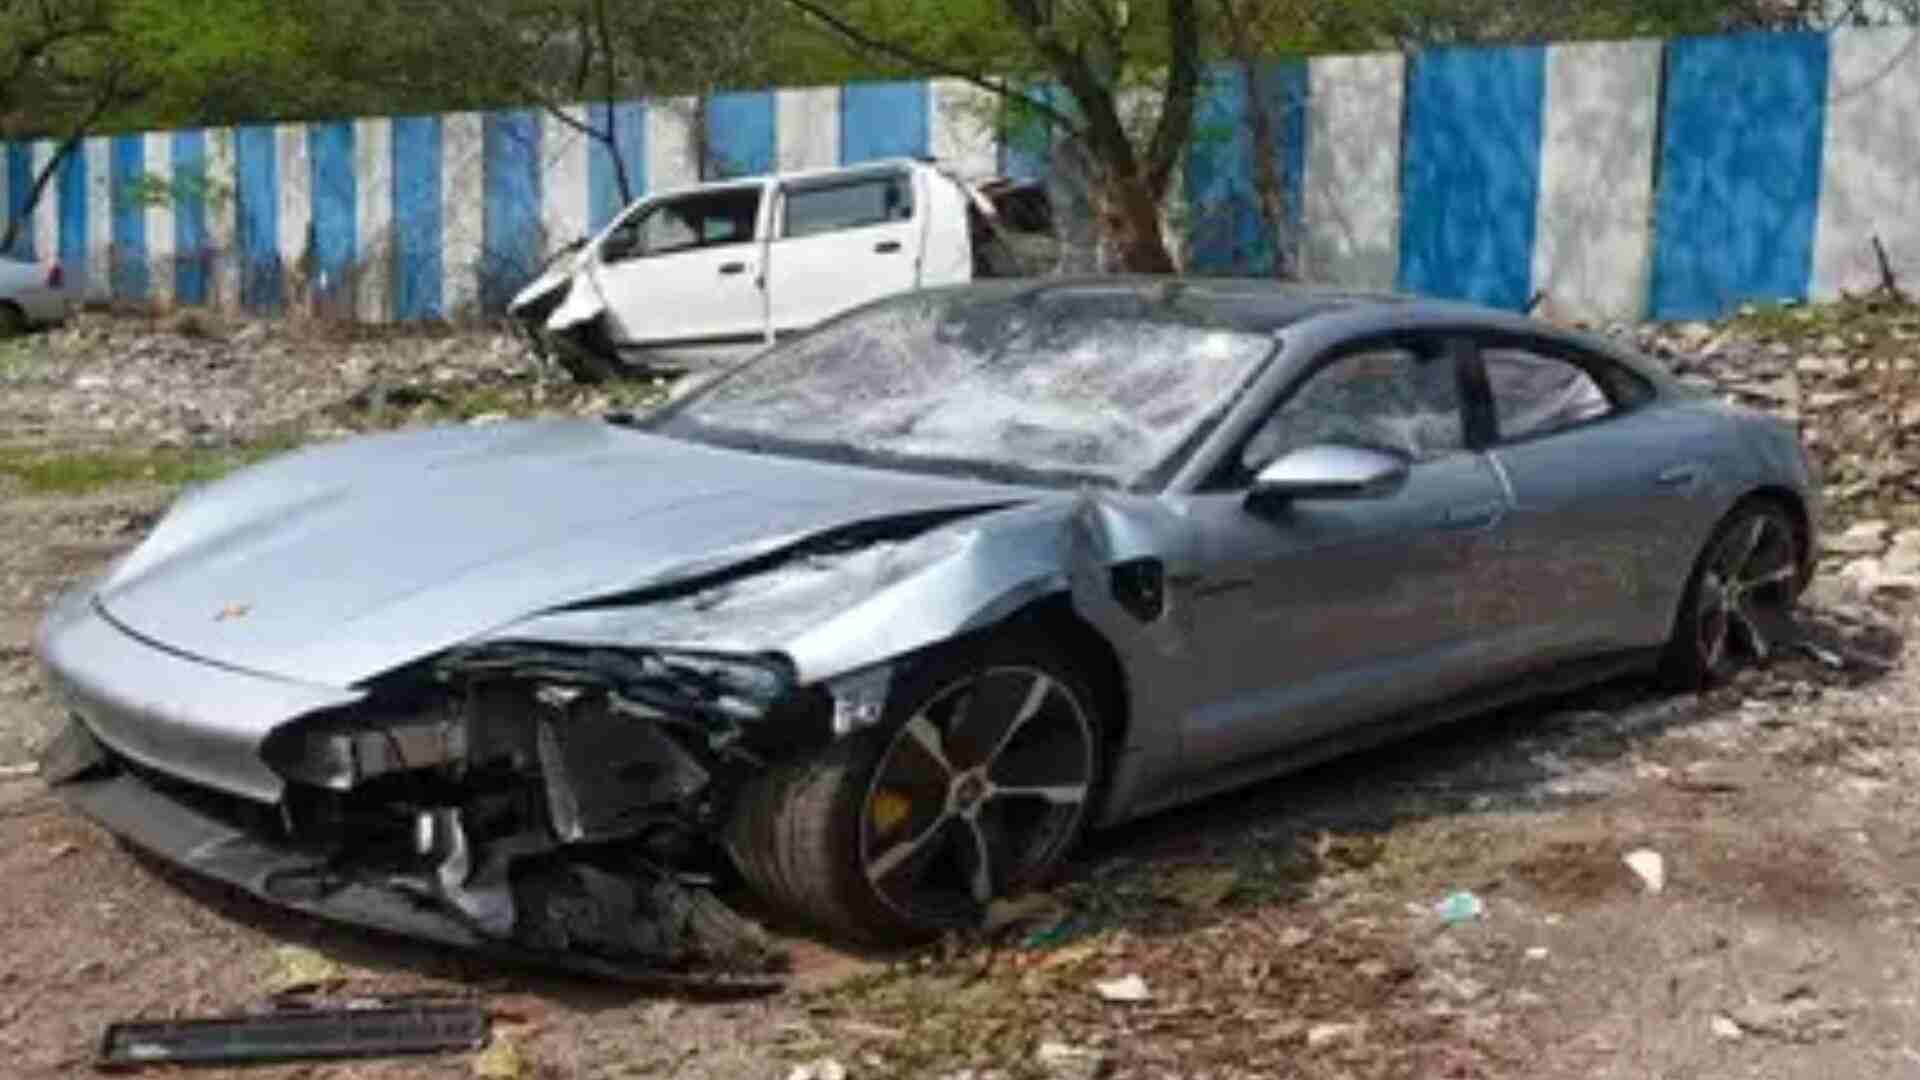 Pune Porsche accident: The police sought teen's response